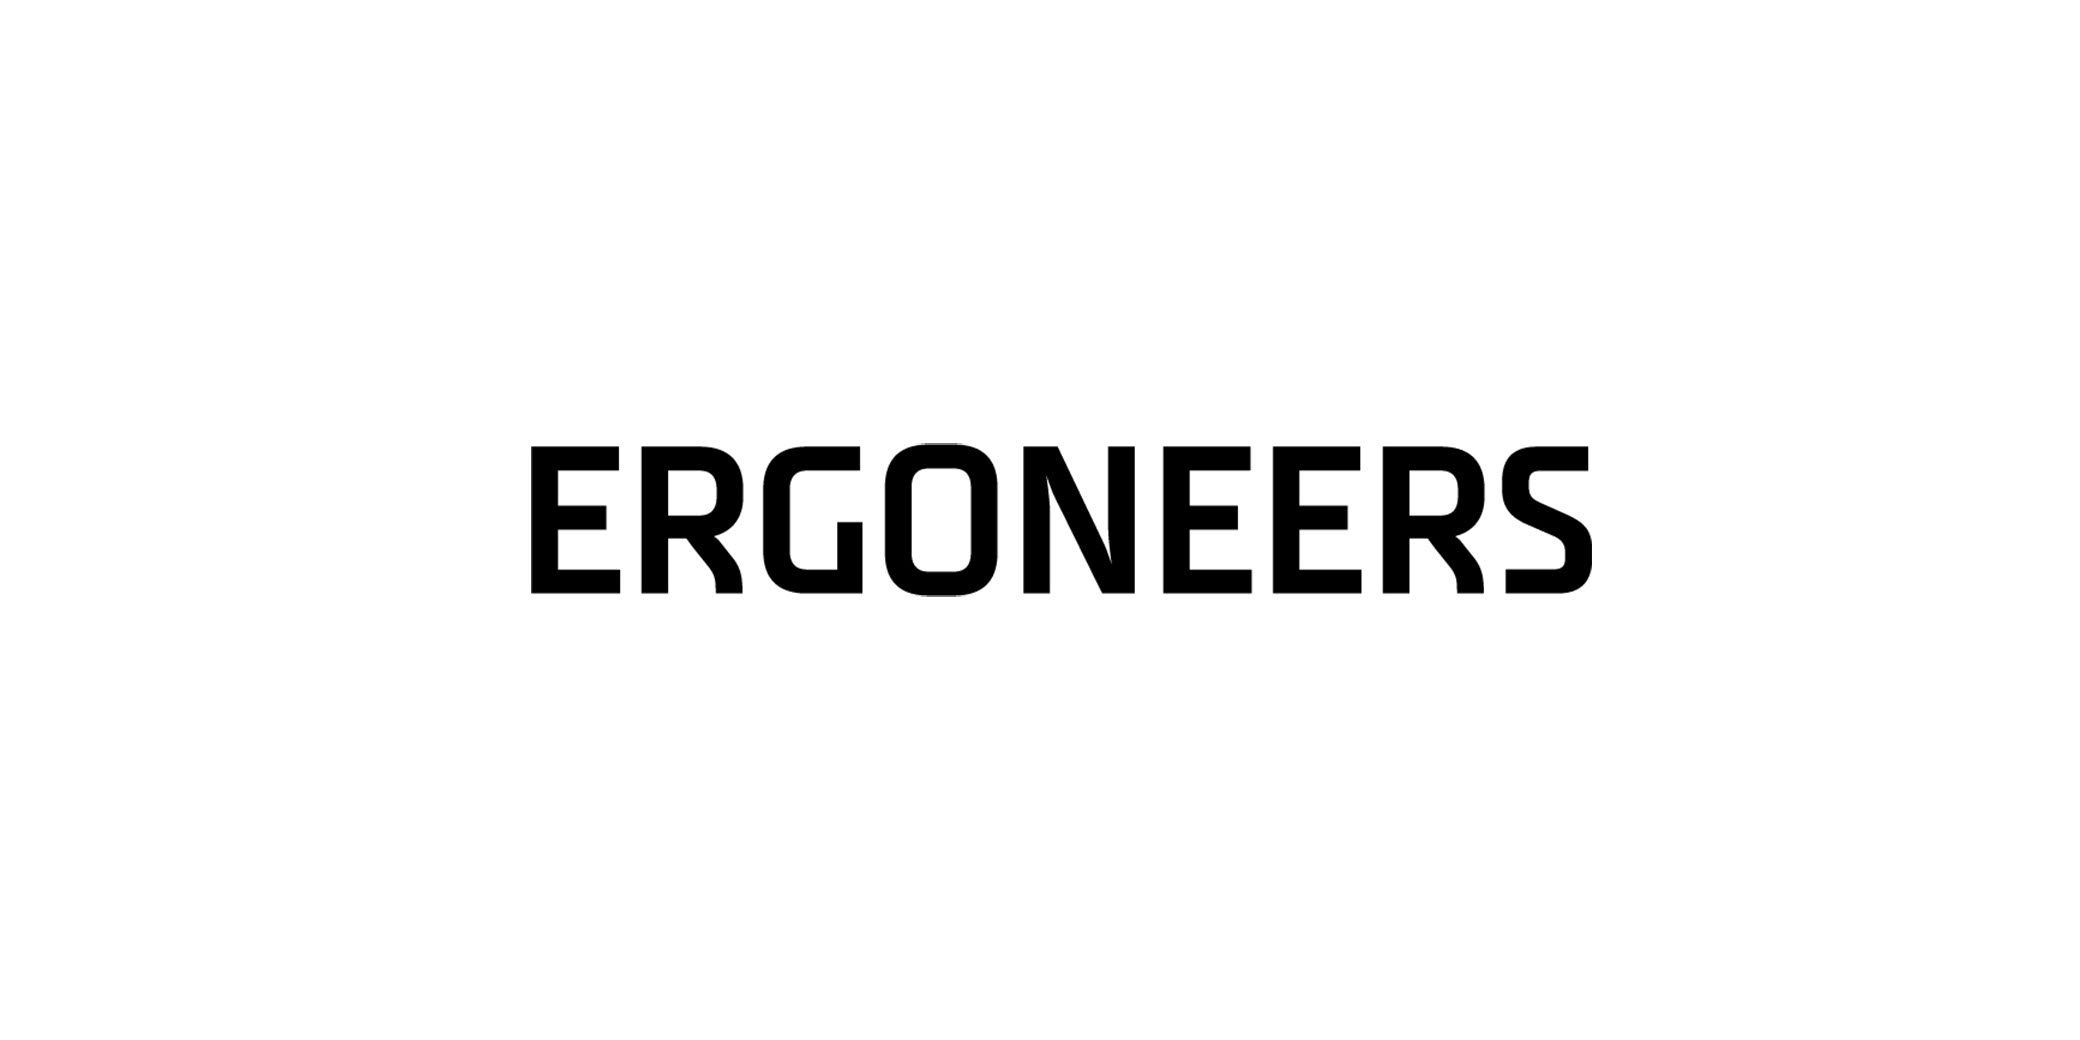 Ergoneers logo